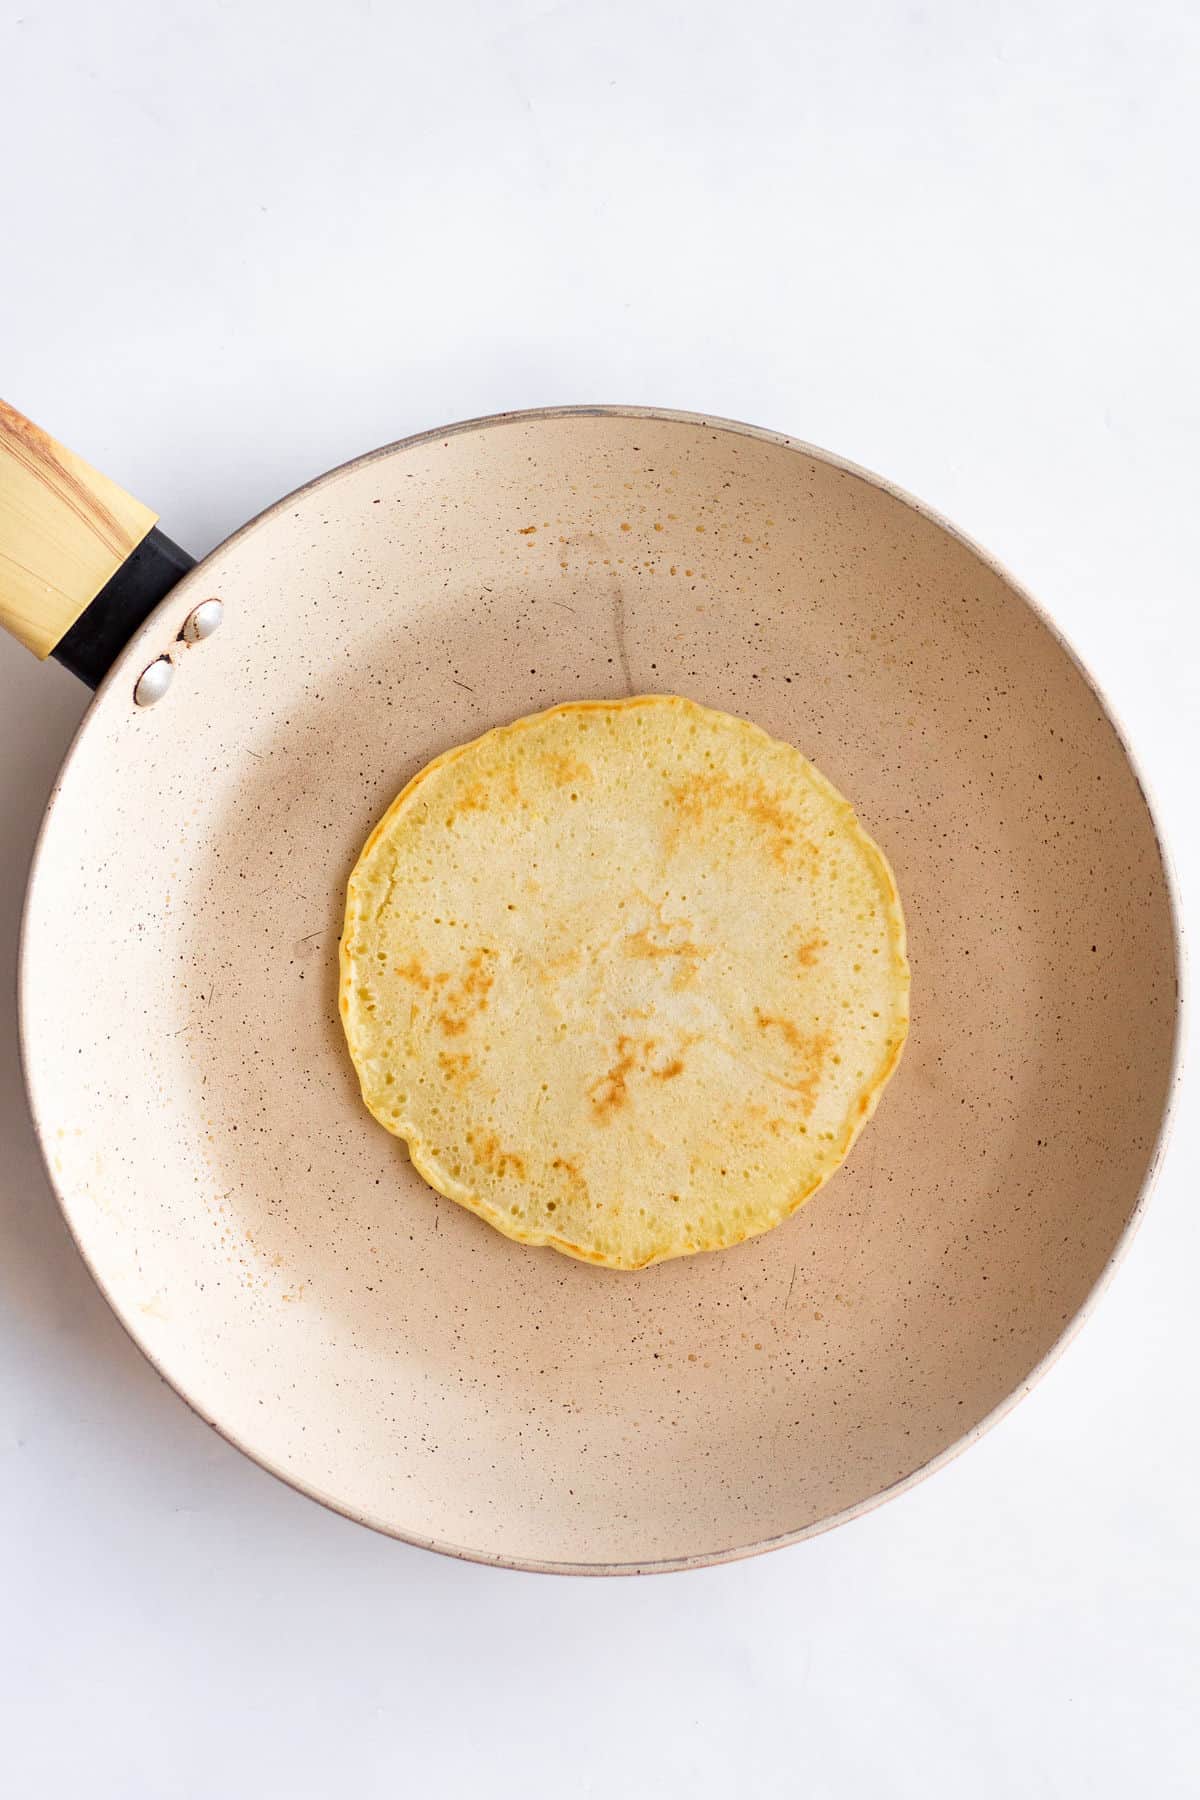 pancake fried on a griddle pan